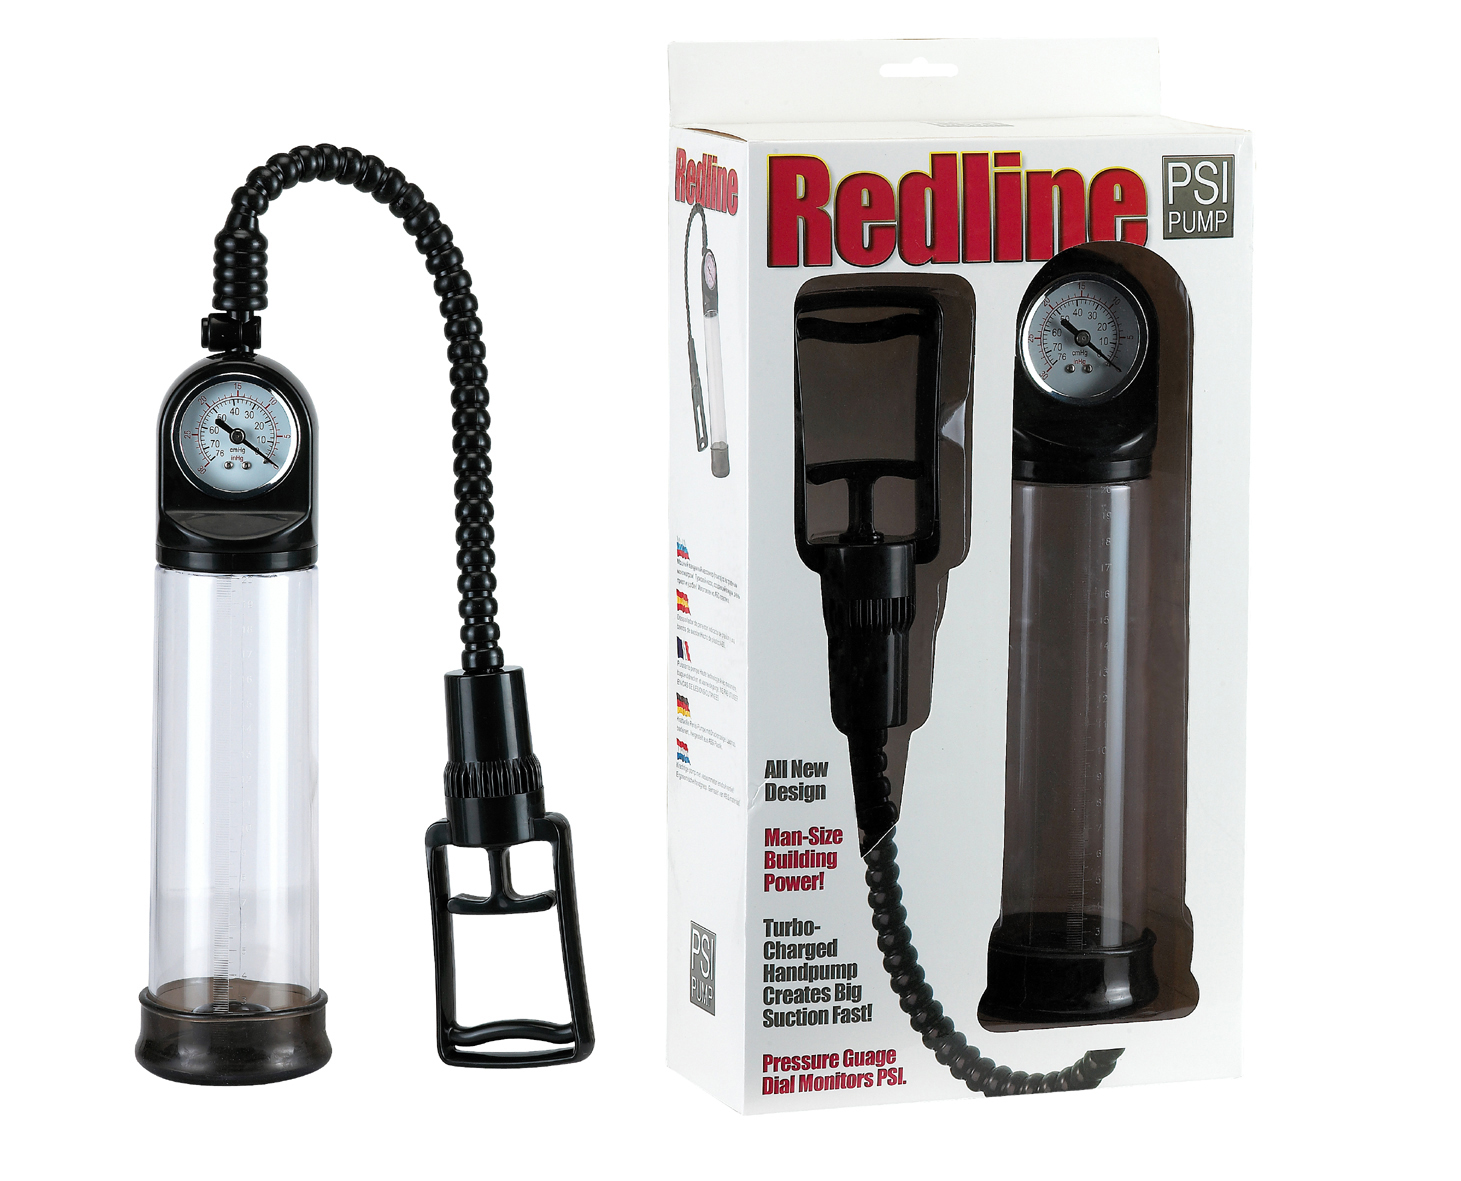 Redline PSI Pump